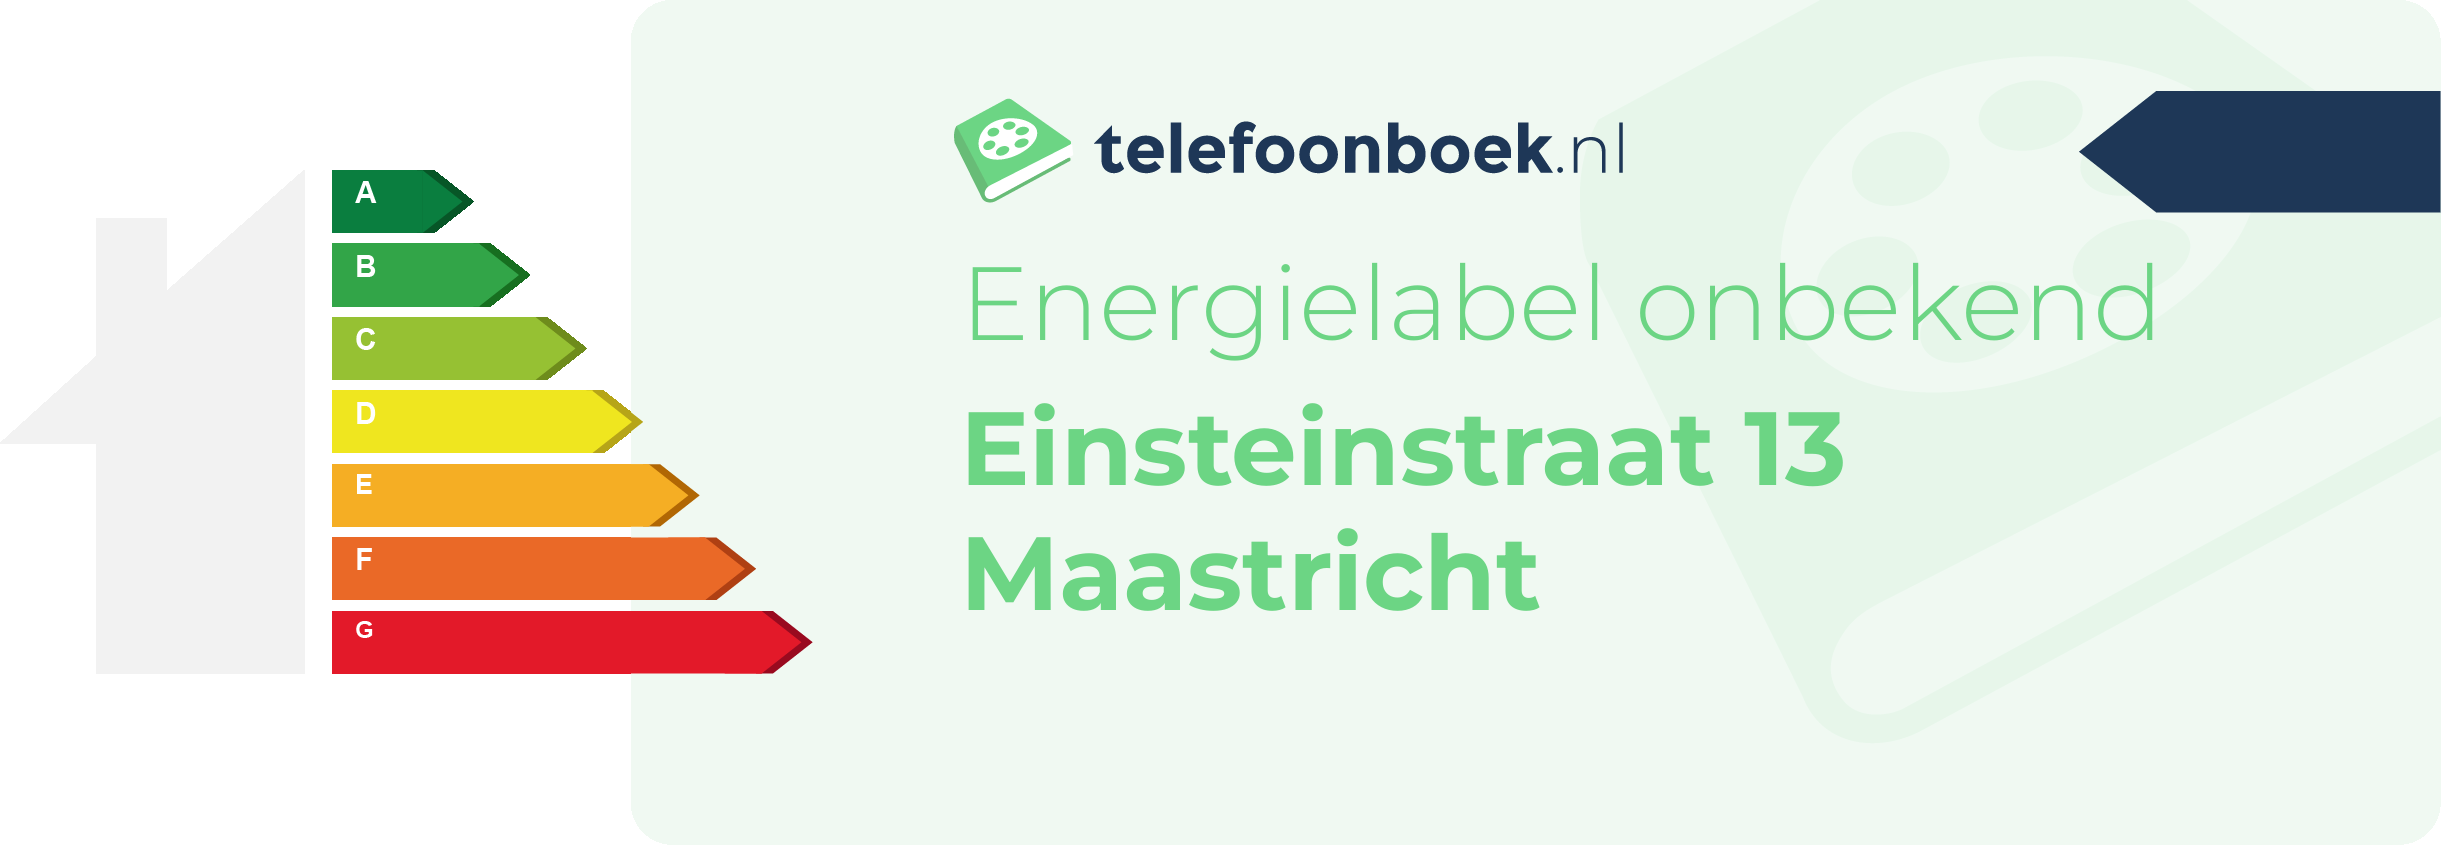 Energielabel Einsteinstraat 13 Maastricht